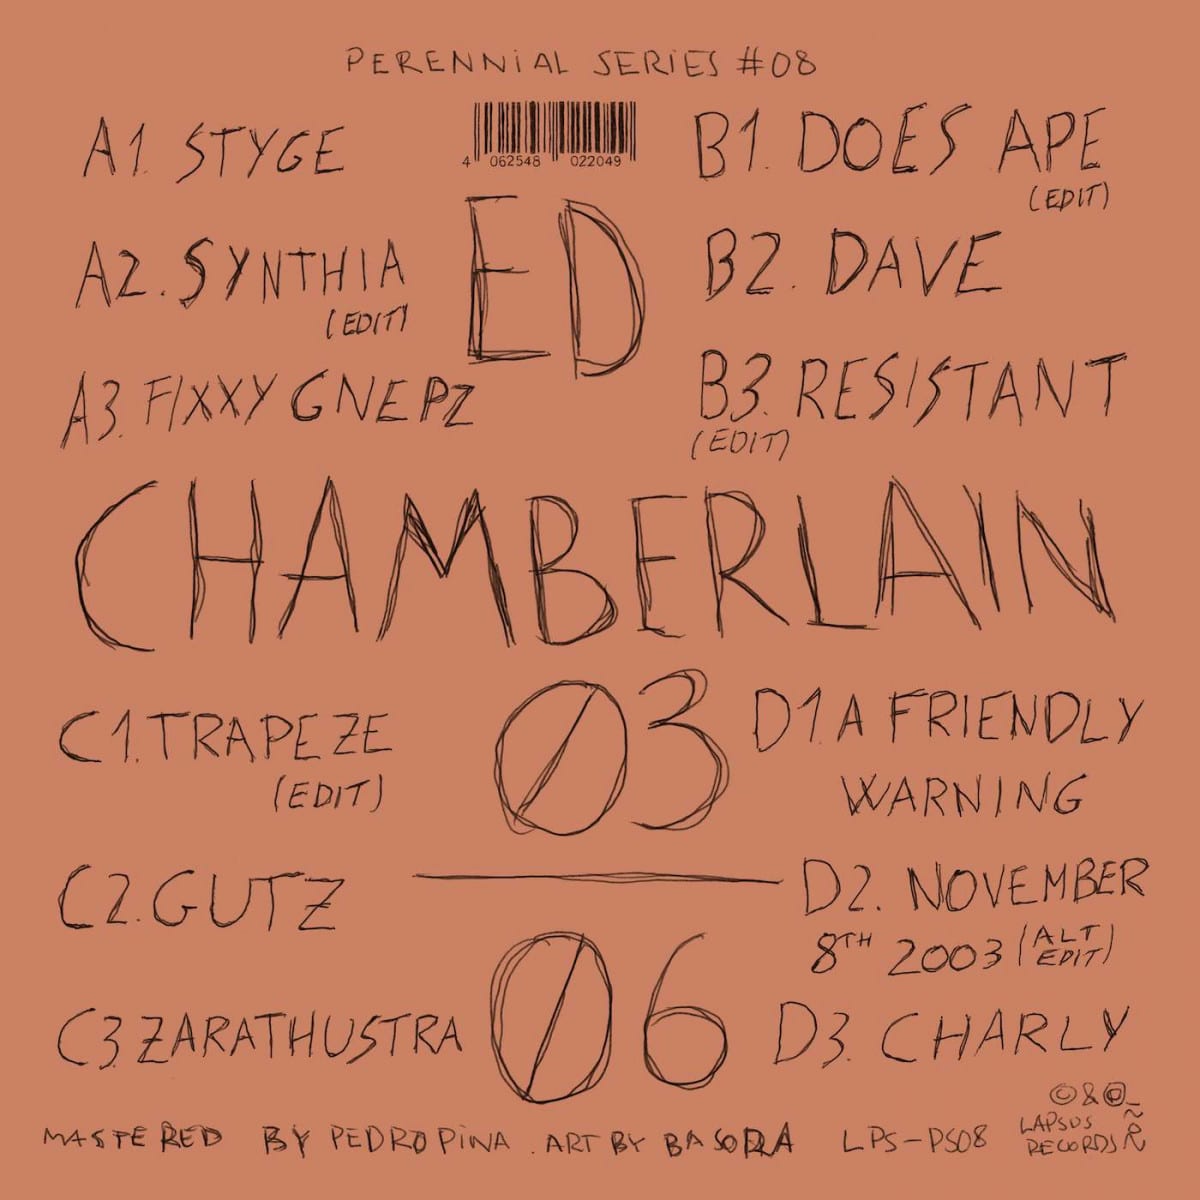 Ed Chamberlain - 03/06 - LPS-PS08 - LAPSUS